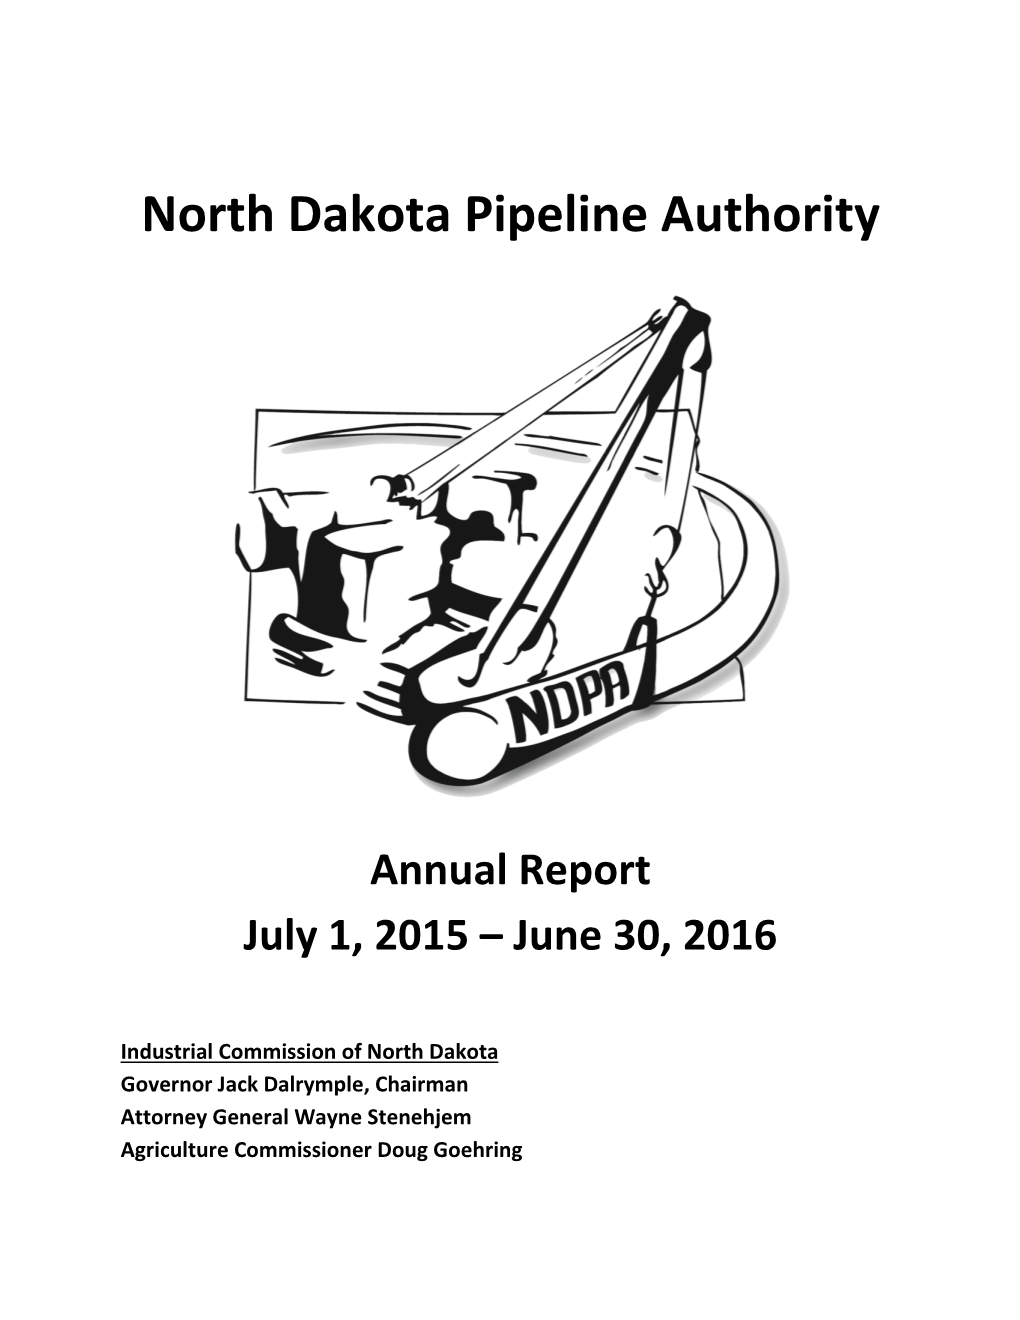 Pipeline Authority Annual Report 2016